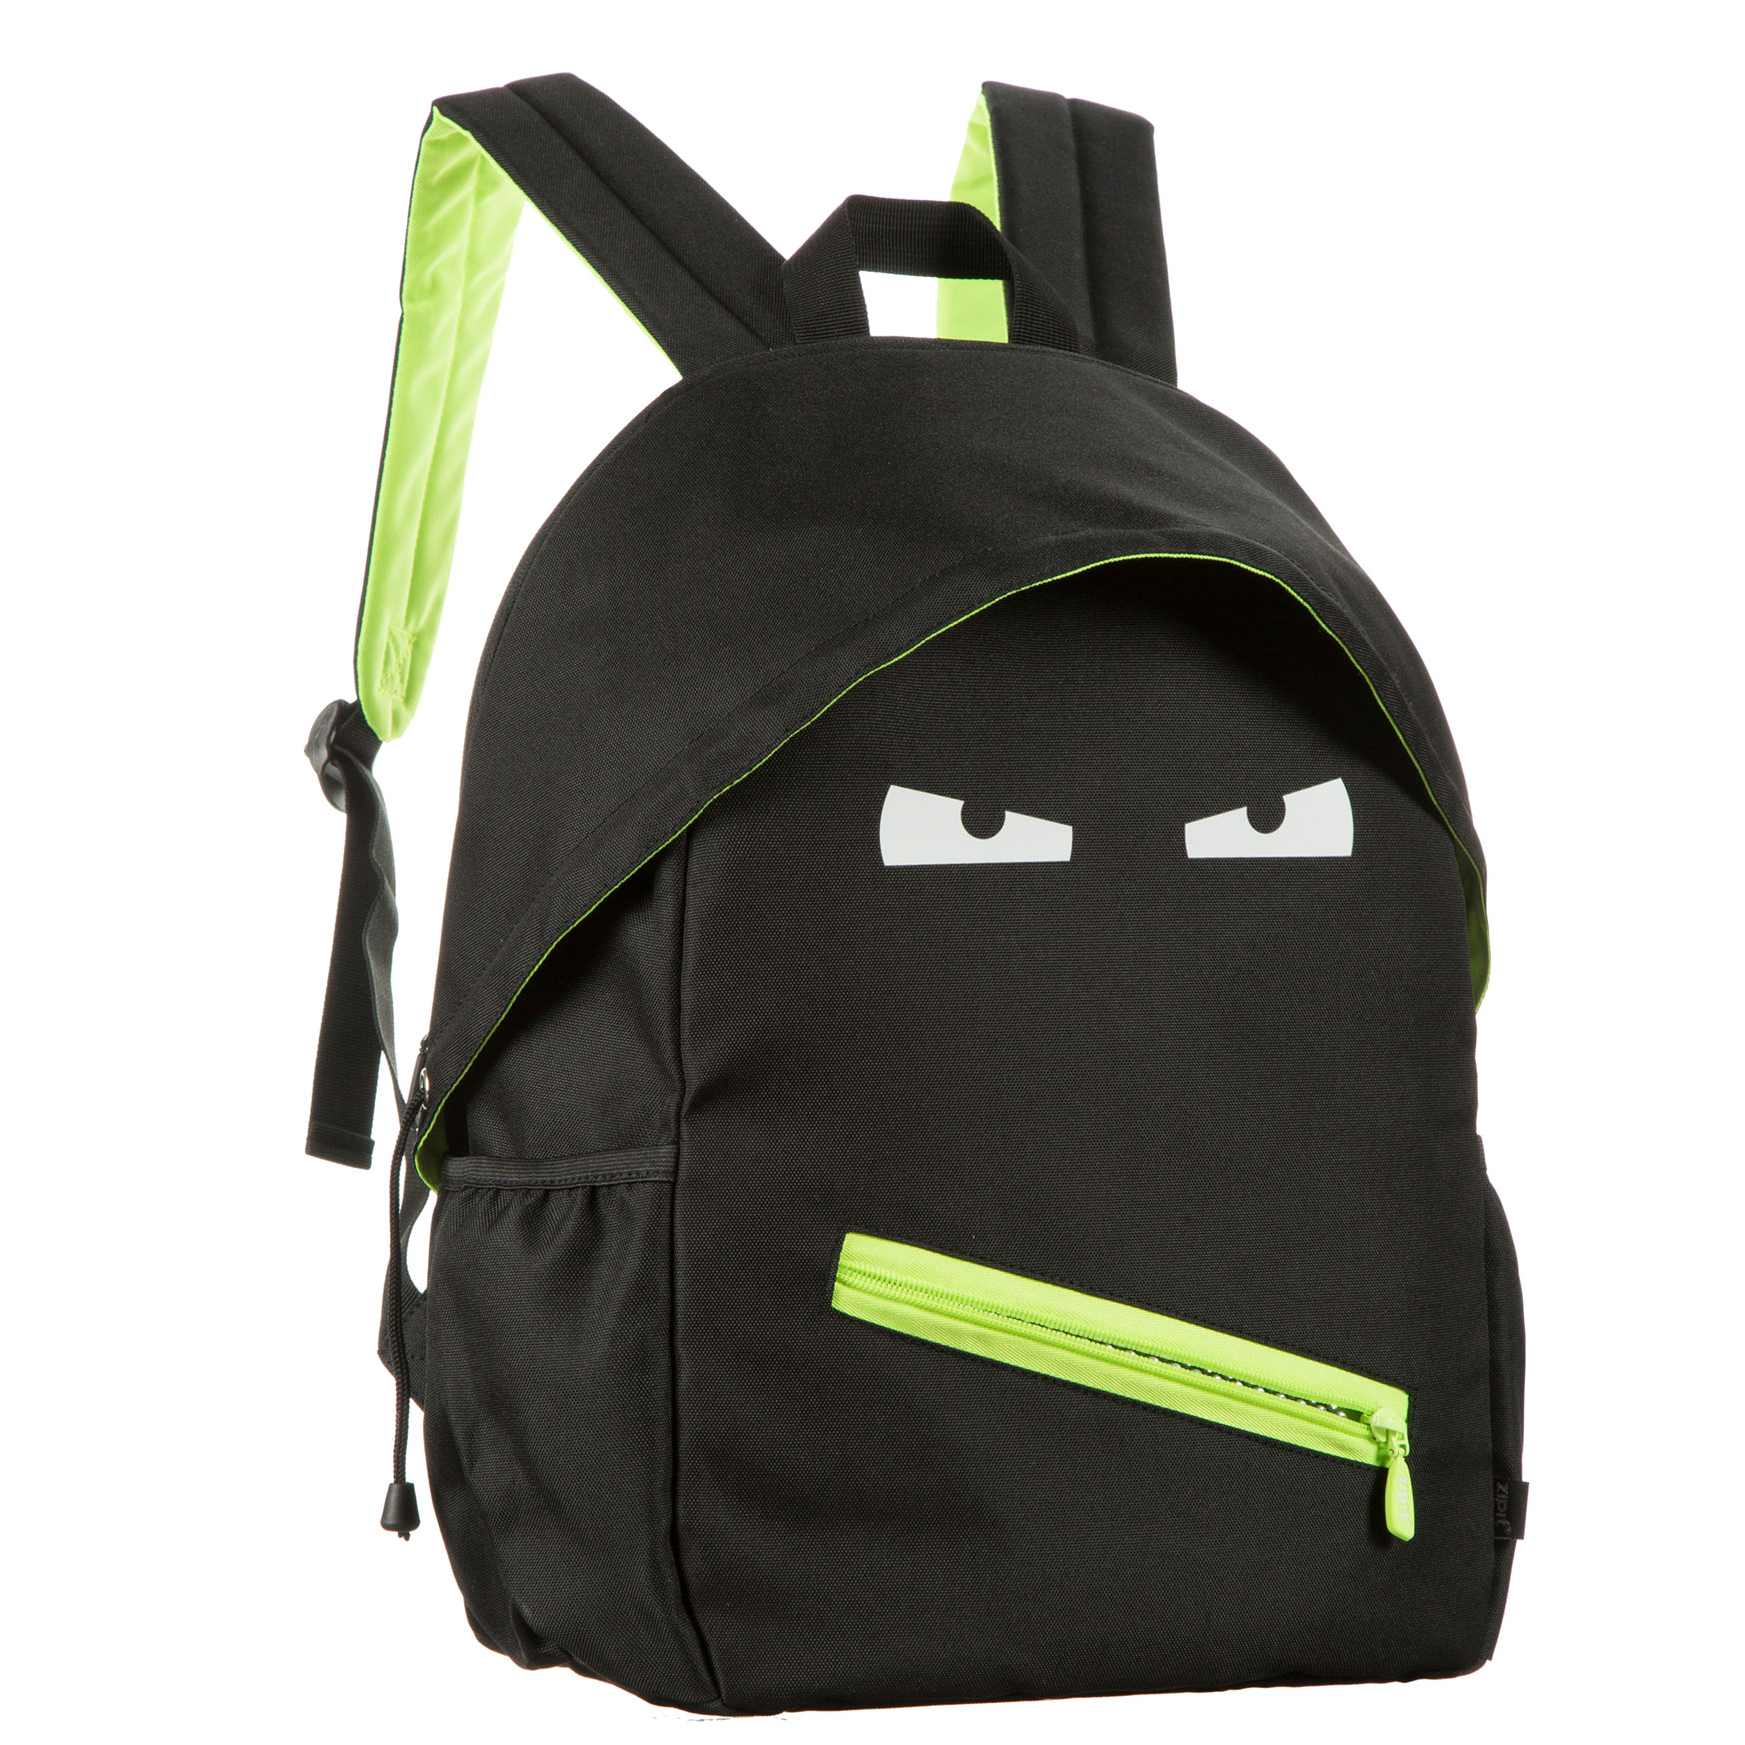 ZIPIT Grillz Backpack for Boys Elementary School & Preschool, Cute Book Bag for Kids (Black) - image 3 of 10